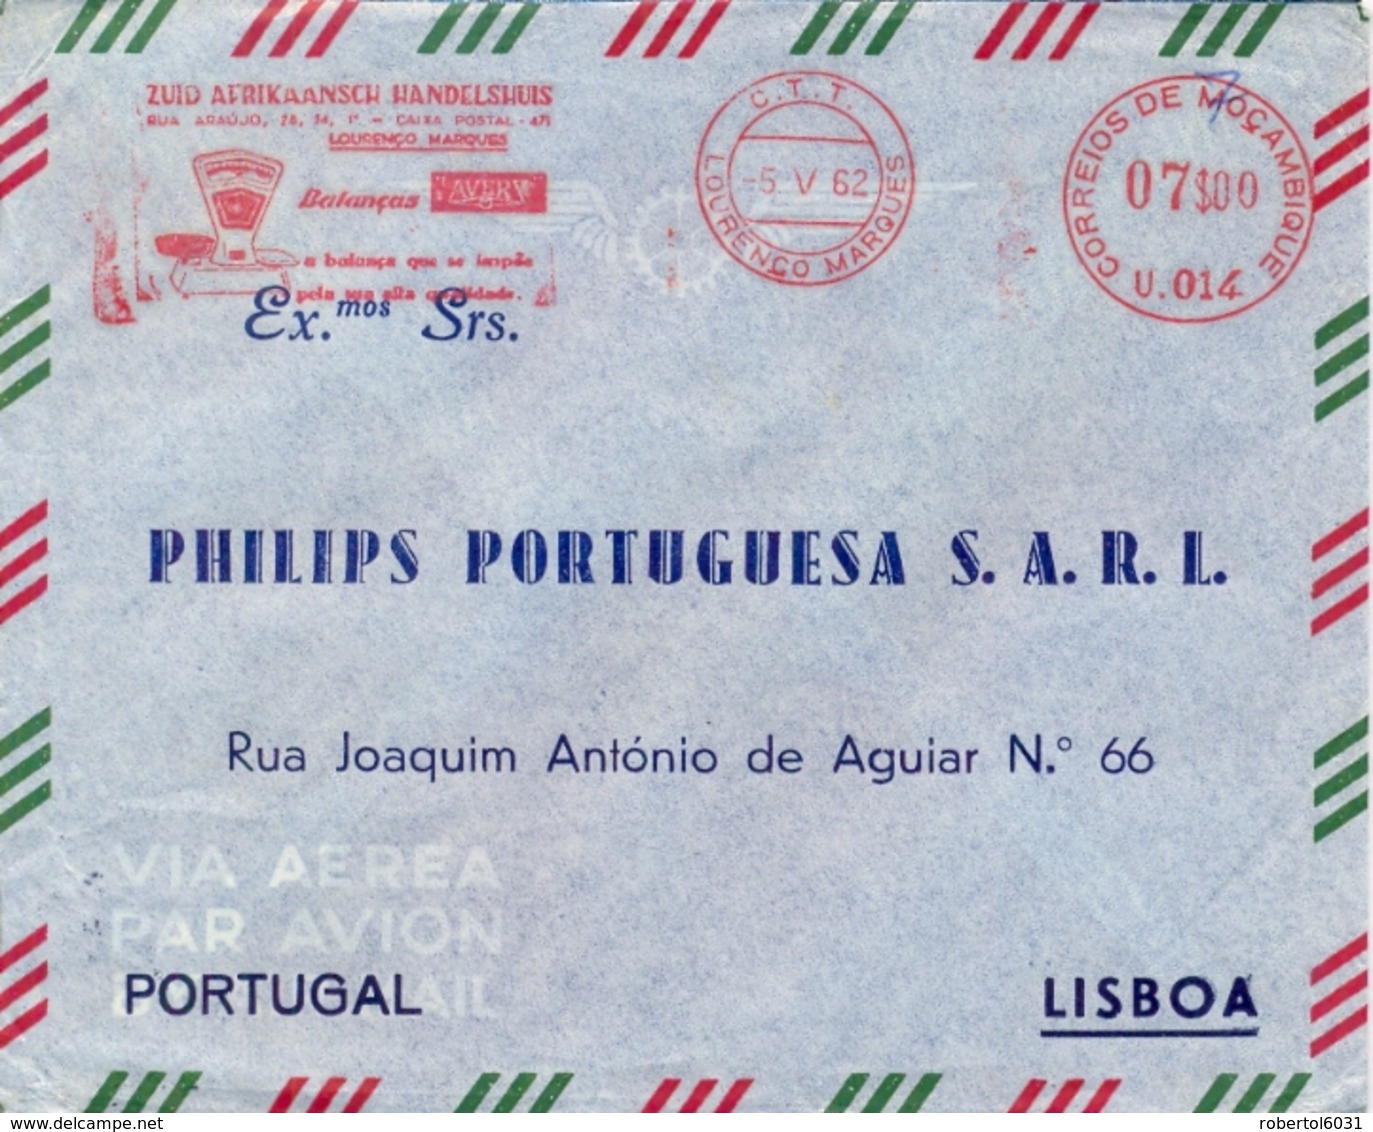 Mozambique 1962 Commercial Cover To Portugal With Lourenço Marques Meter Franking EMA 7 $ Balances AVERY - Fabbriche E Imprese